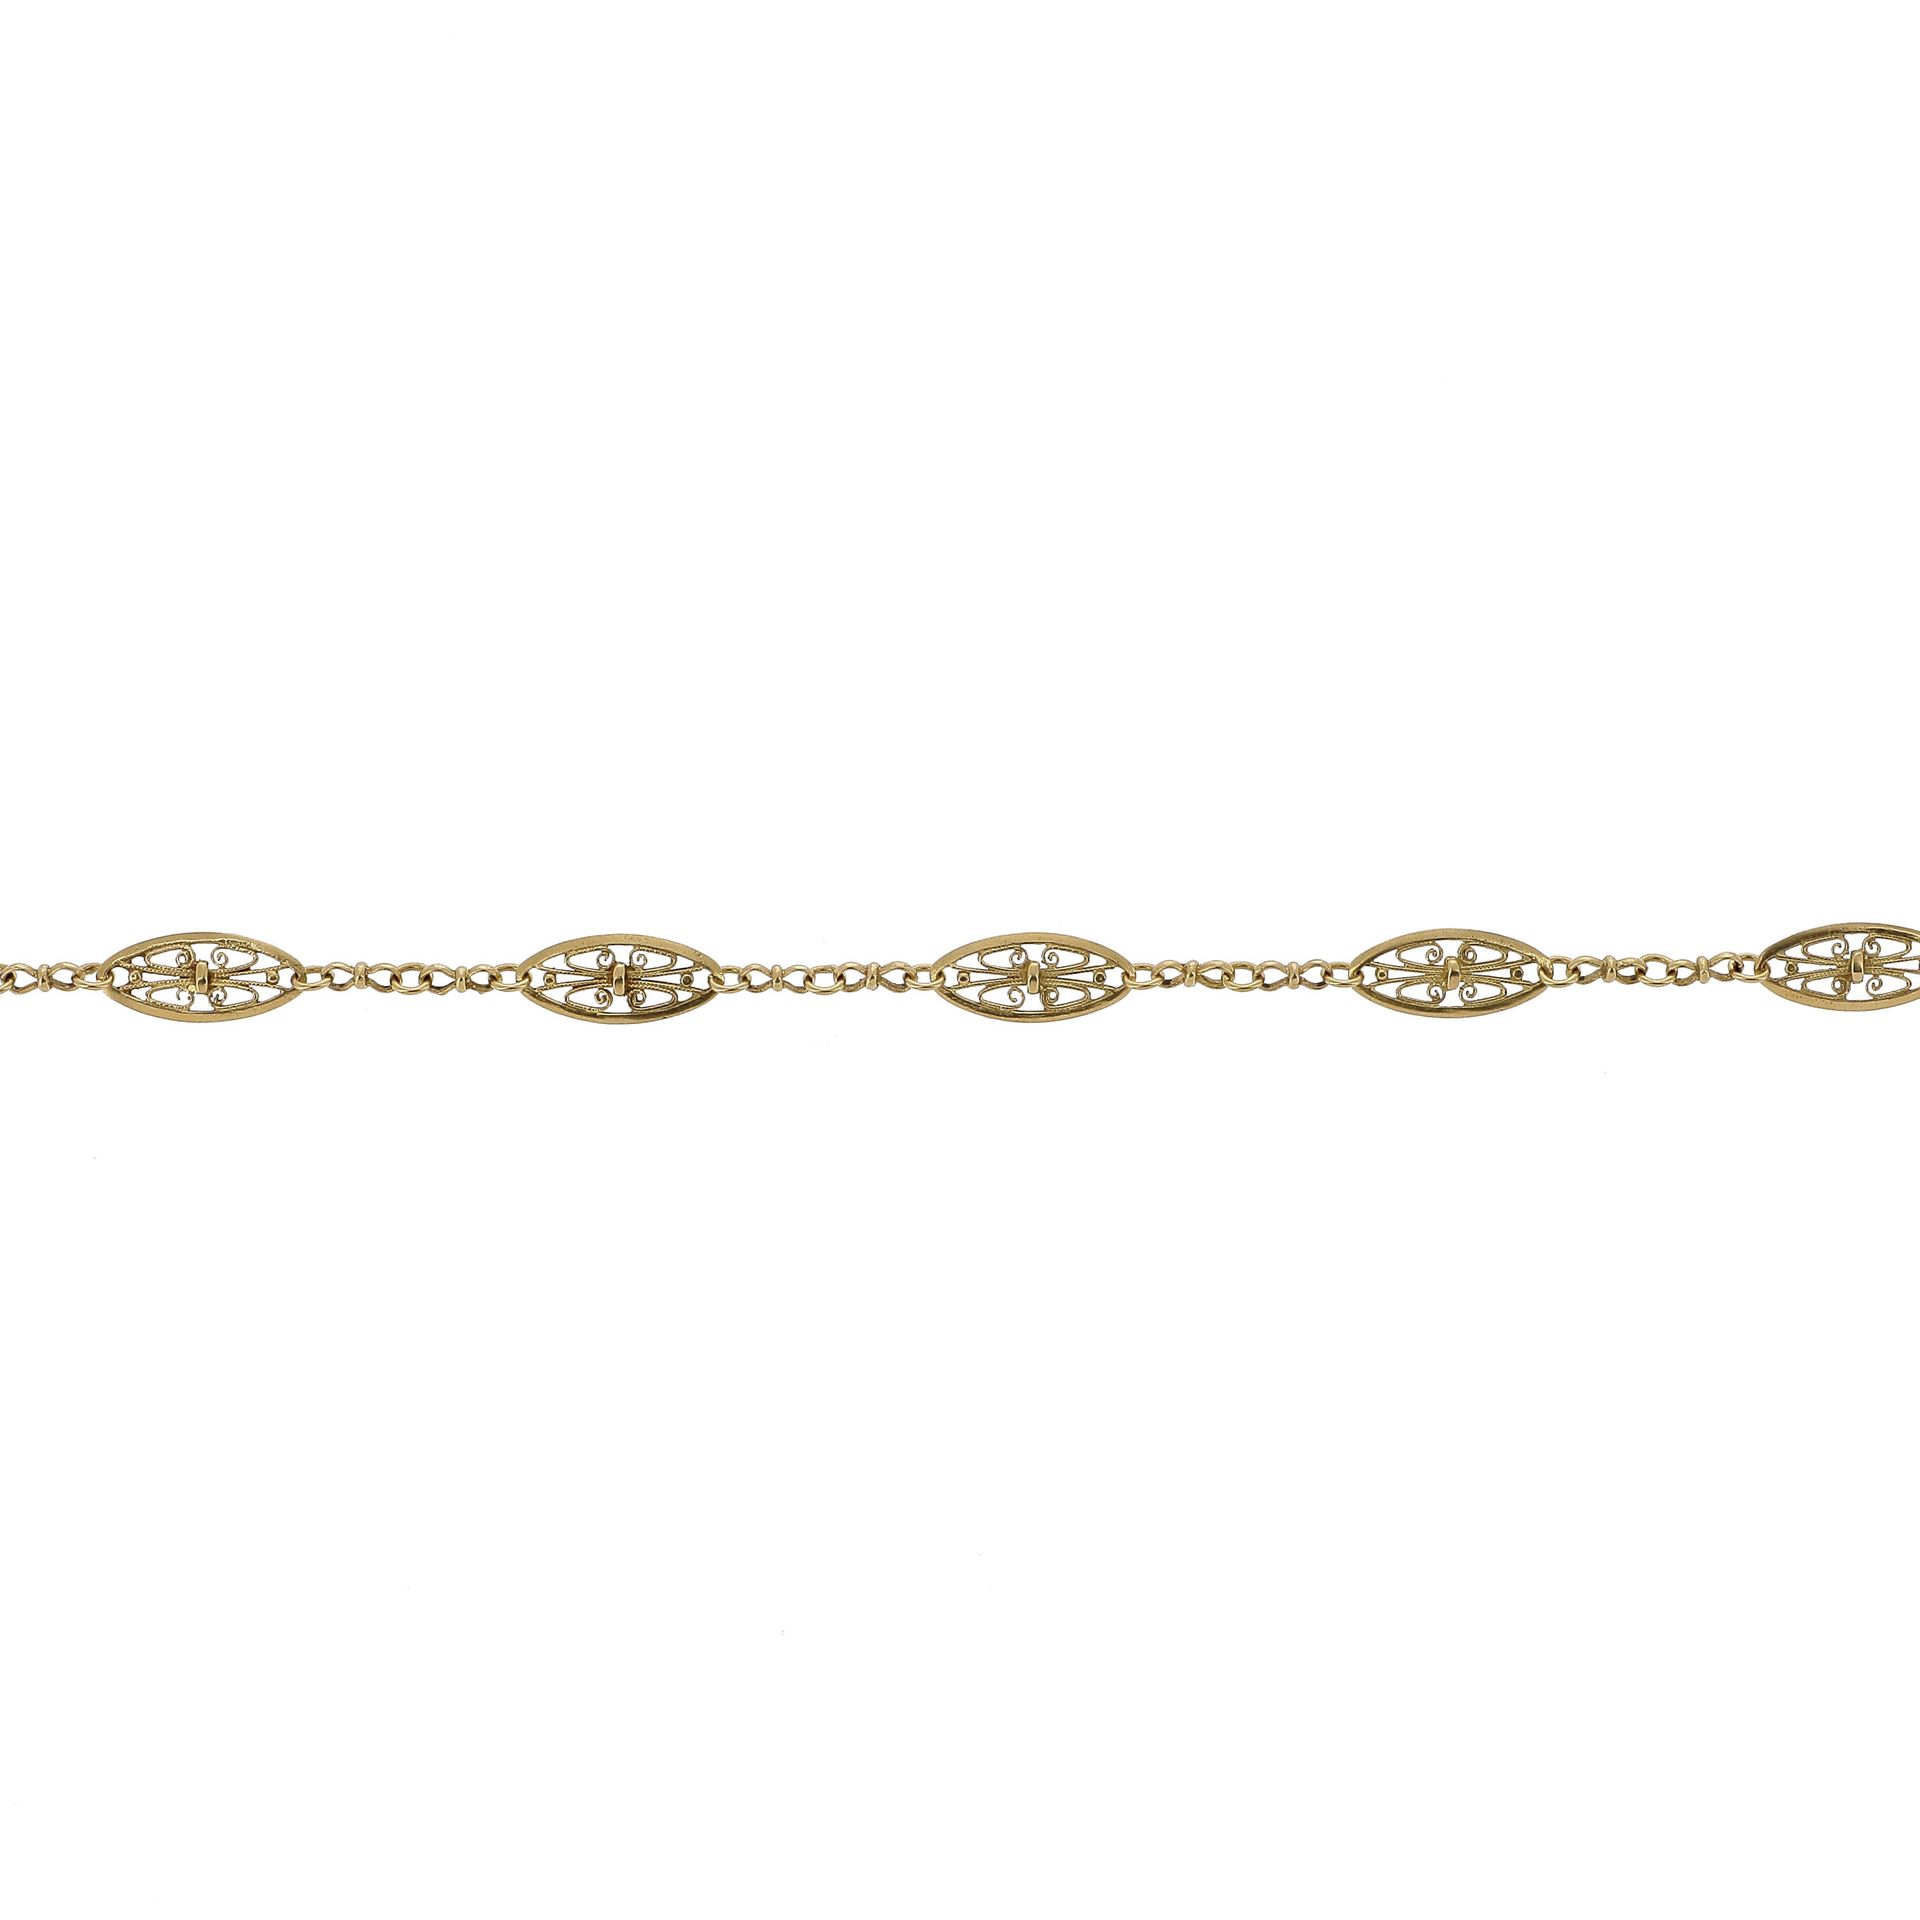 Null 古代水库

黄金链子上有椭圆形的丝状链接。

一条18K金链。



RC :

长度：约74厘米。

重量：25.4克（18K - 750）。